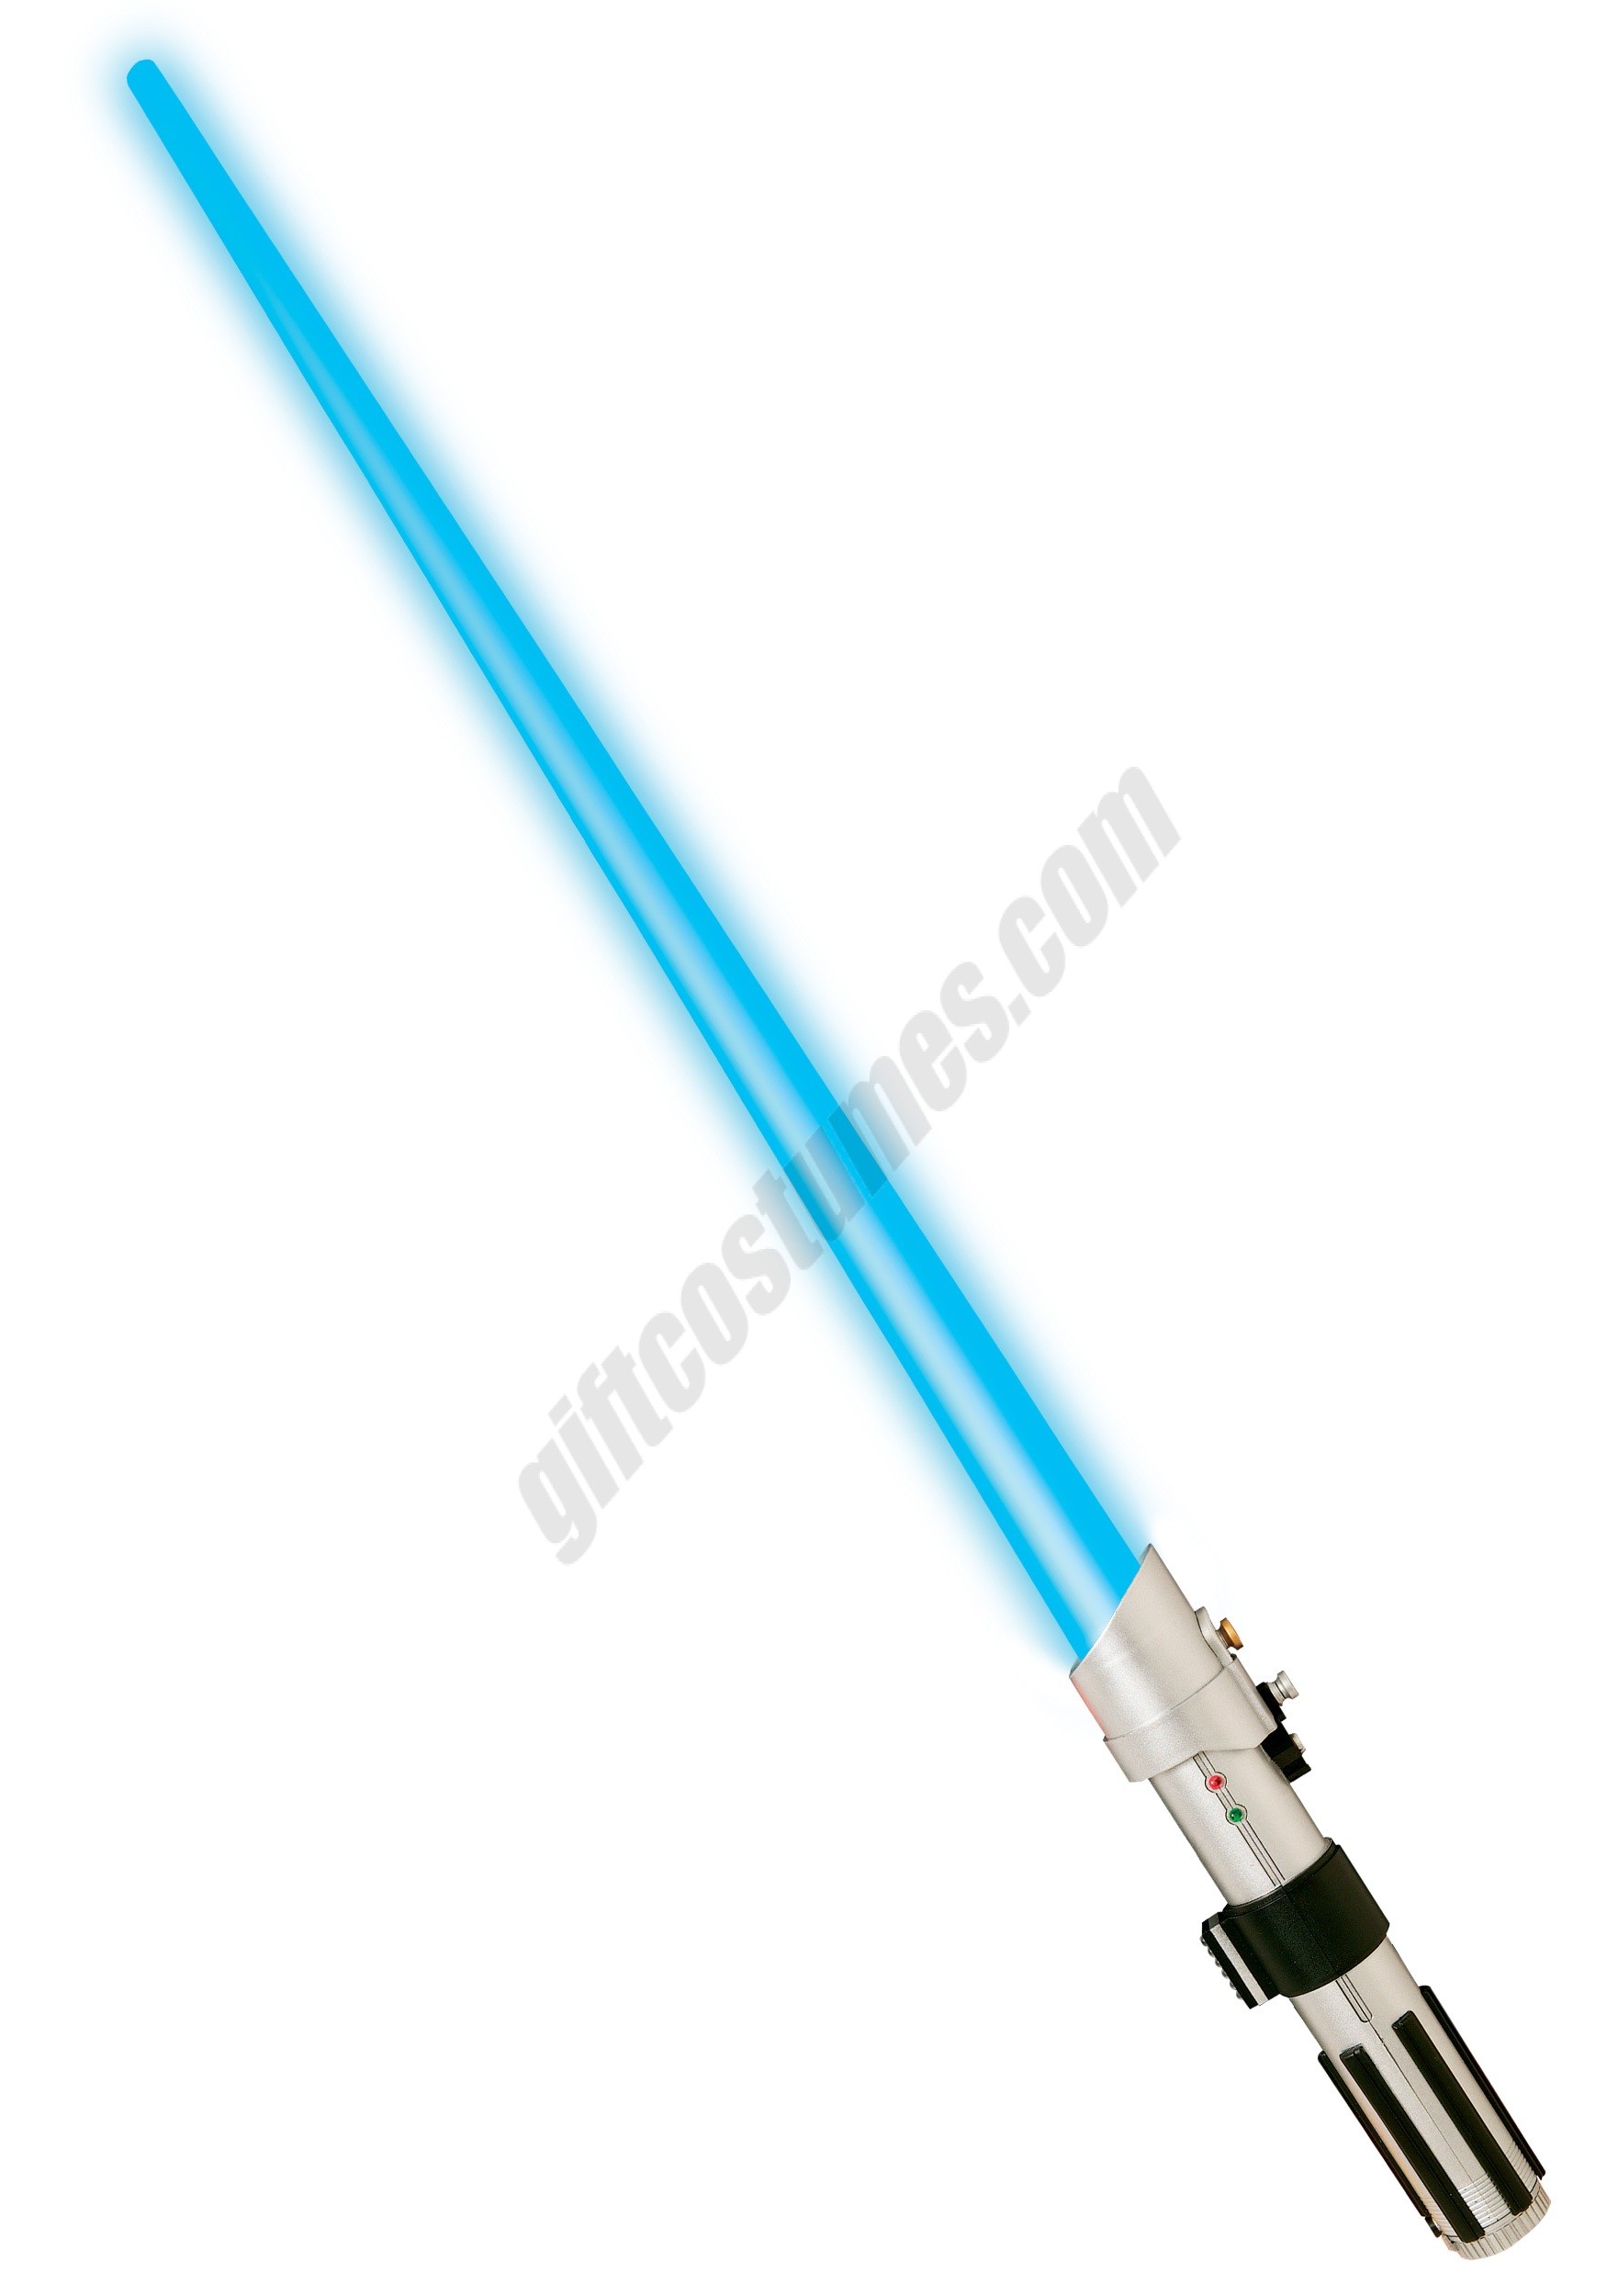 Luke Skywalker Lightsaber Accessory Promotions - Luke Skywalker Lightsaber Accessory Promotions